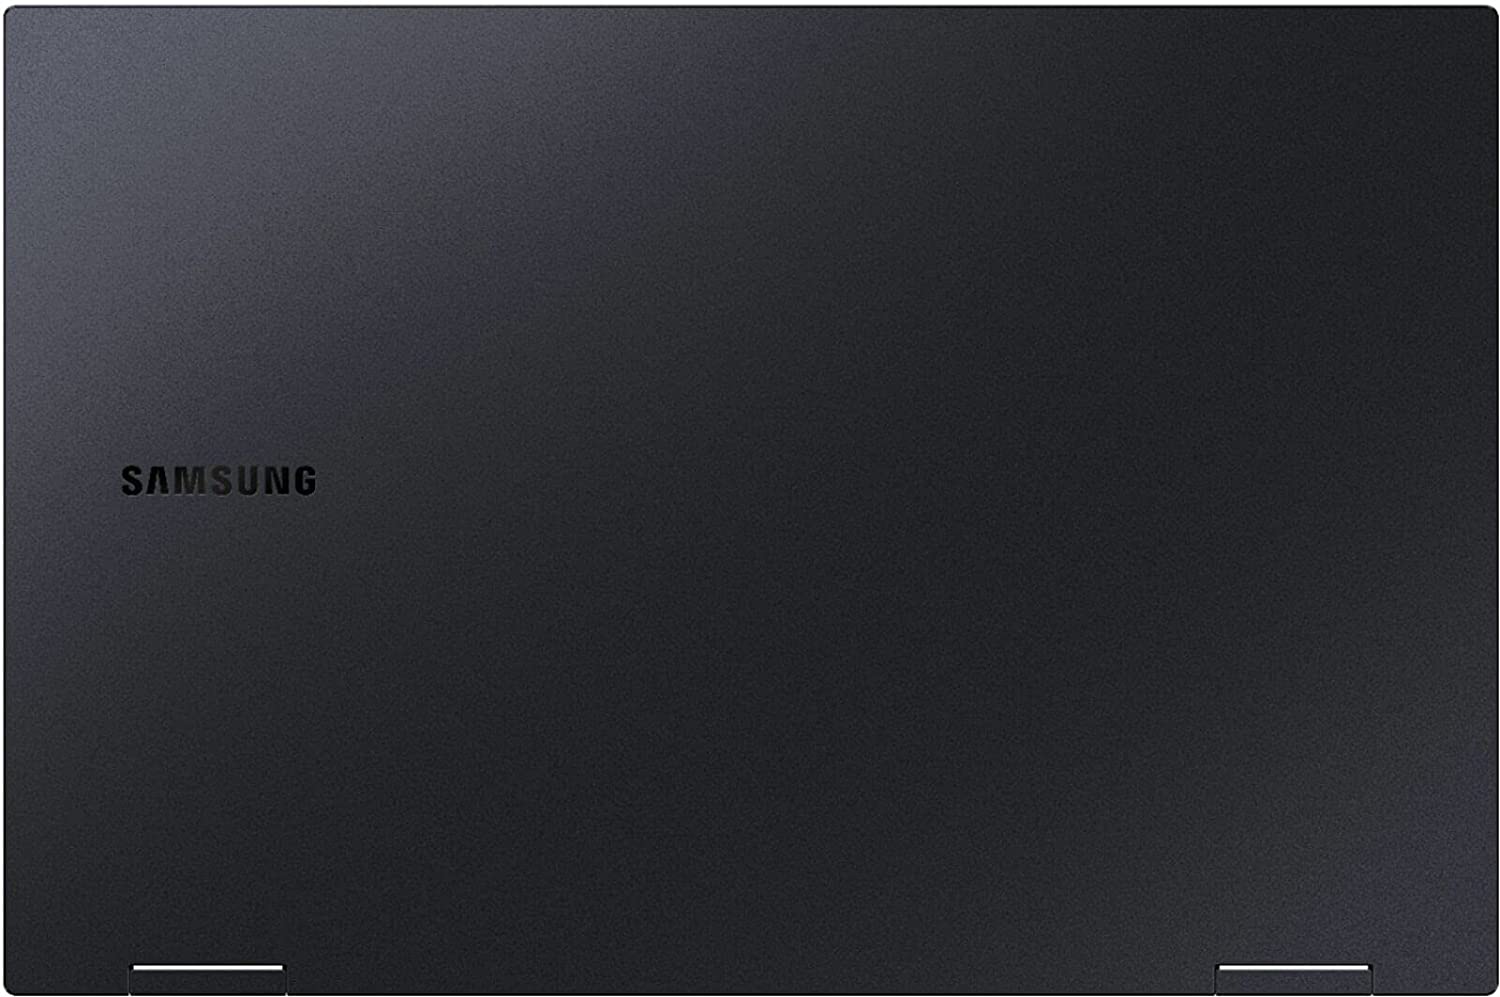 Samsung NP730QDA-KA1US-RB Flex2 Alpha 13.3" FHDT i7-1165G7 16GB 512GB W10H, Black - Certified Refurbished